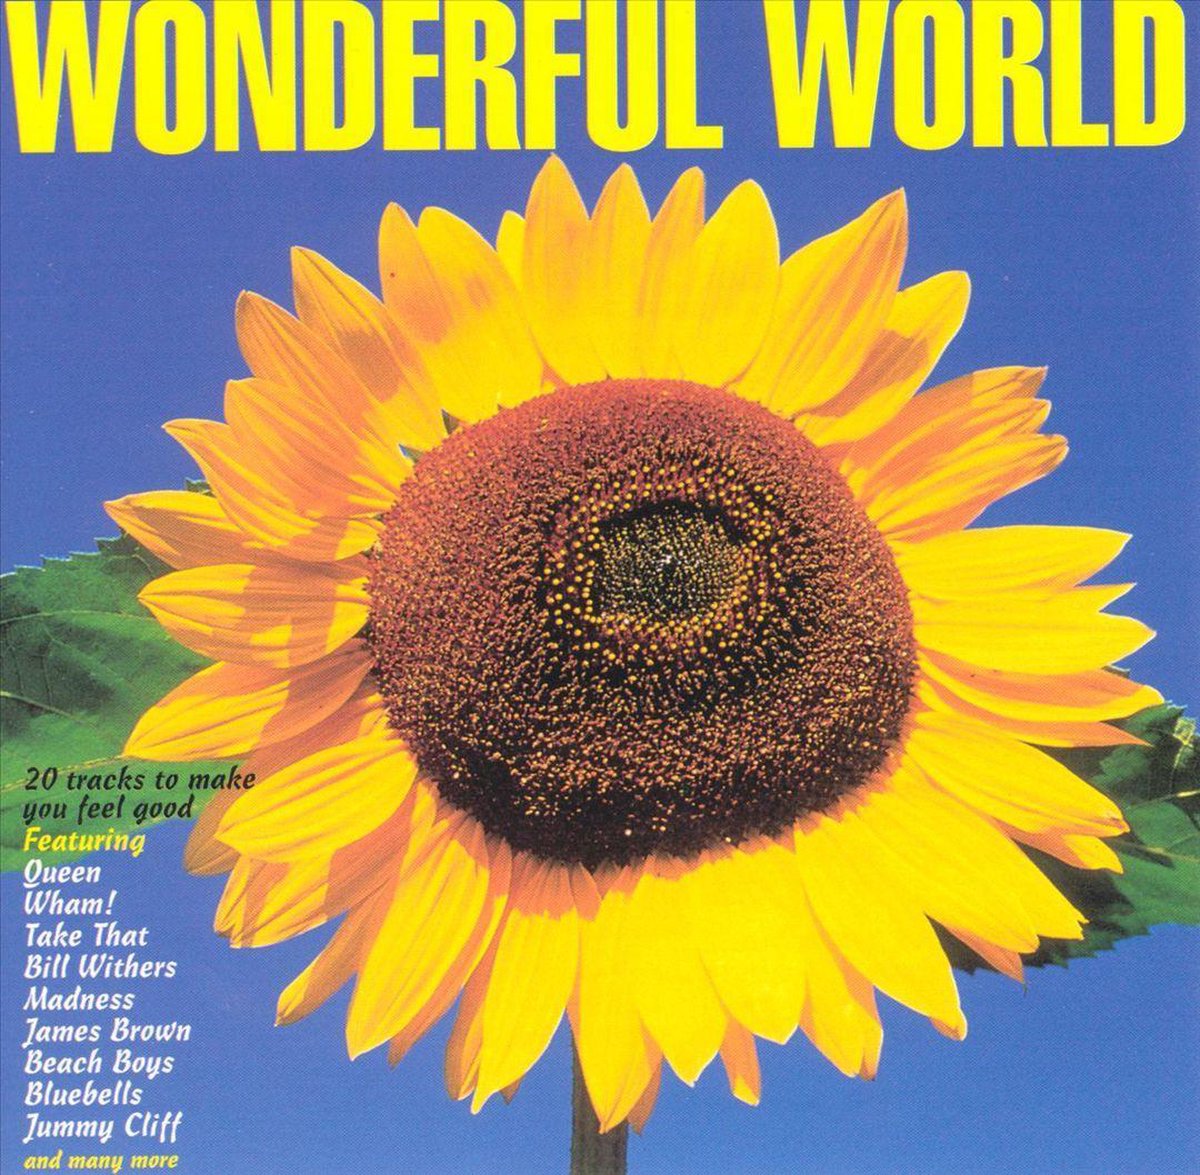 Wonderful World - Wonderful World - various artists